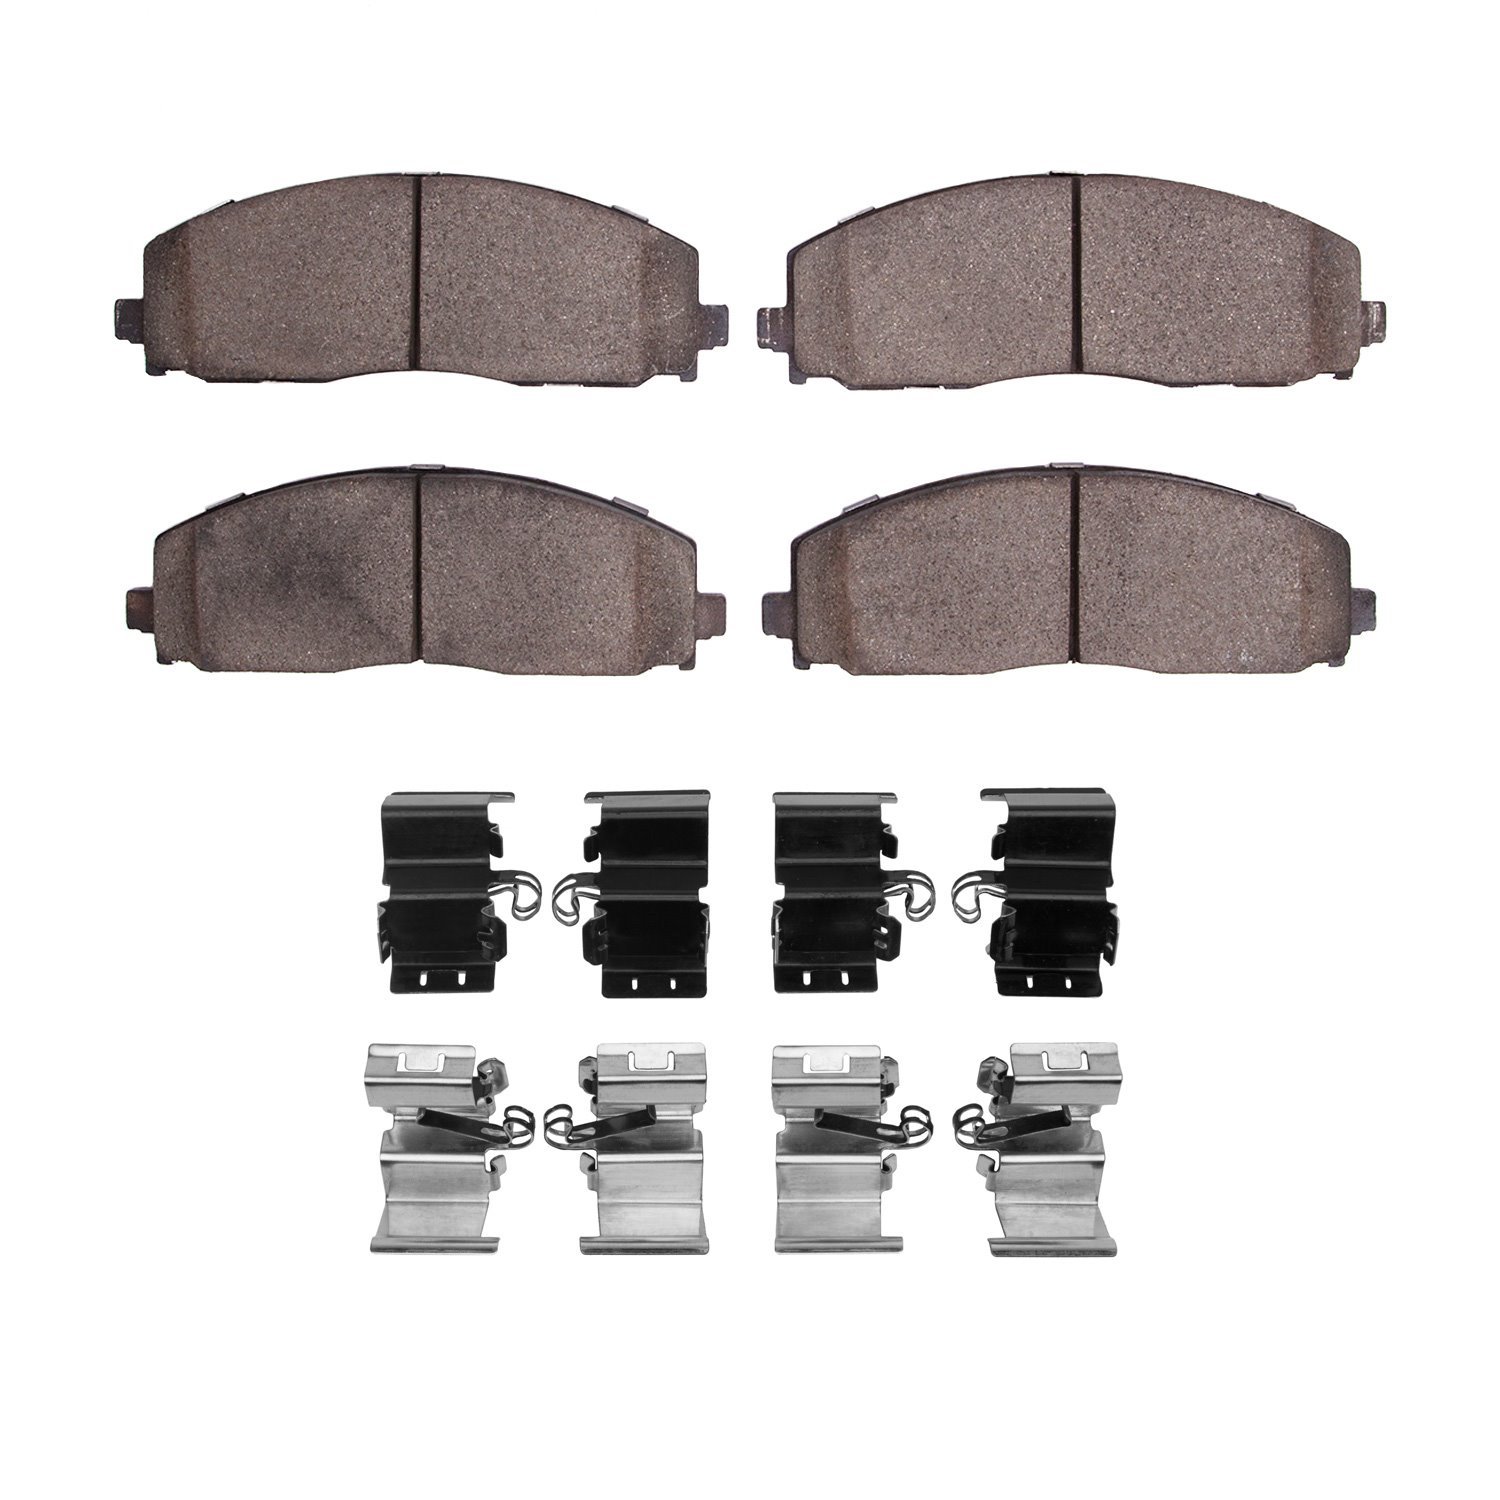 1310-1589-01 3000-Series Ceramic Brake Pads & Hardware Kit, Fits Select Multiple Makes/Models, Position: Front